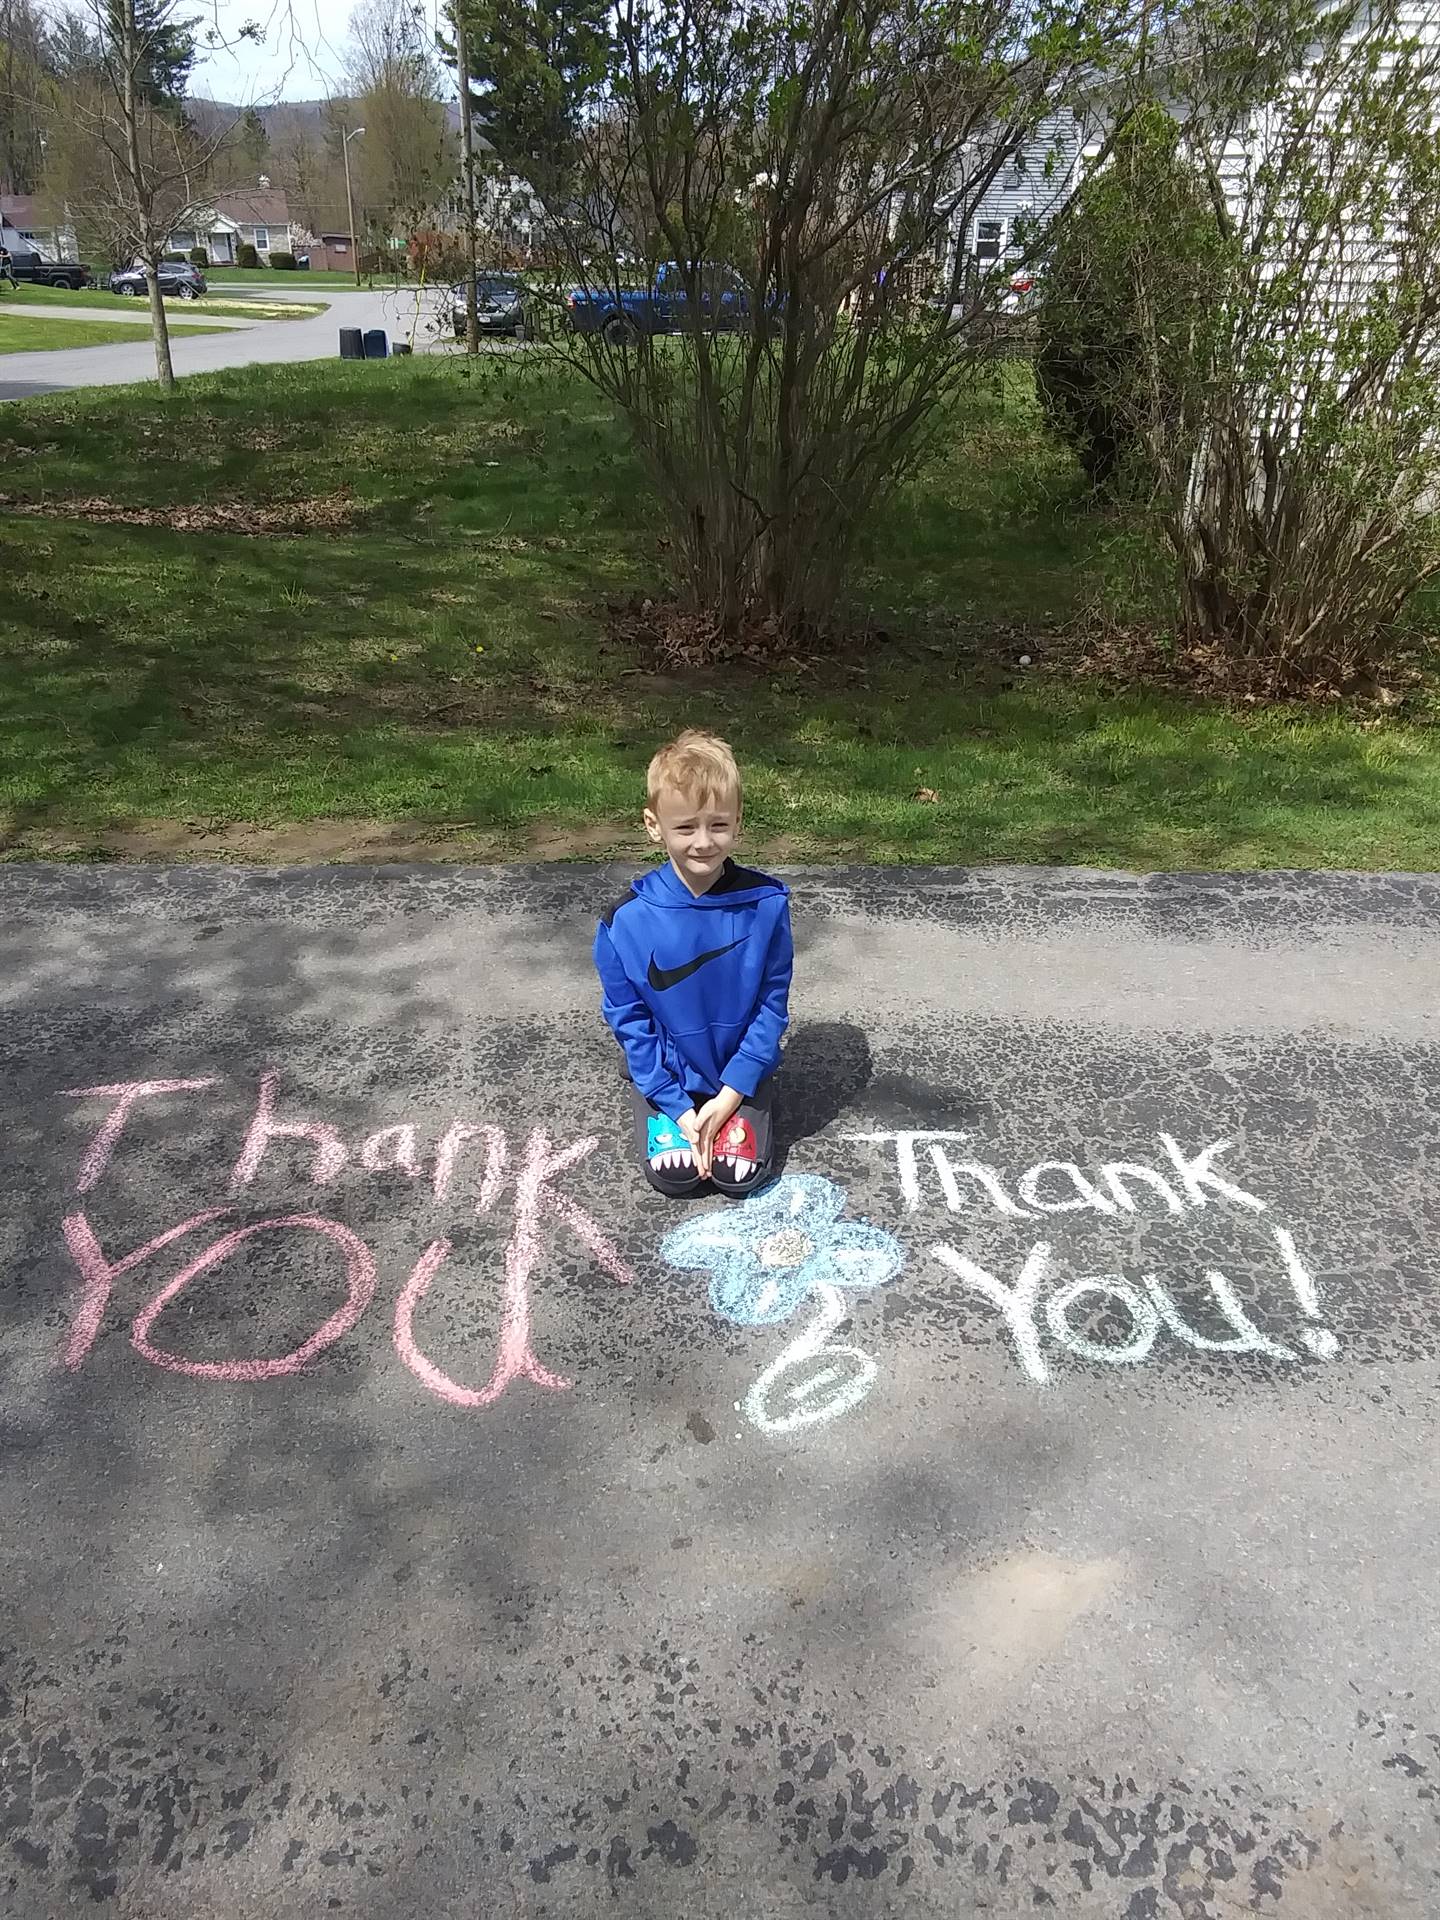 Boy with sidewalk chalk message, "Thank you thank you"